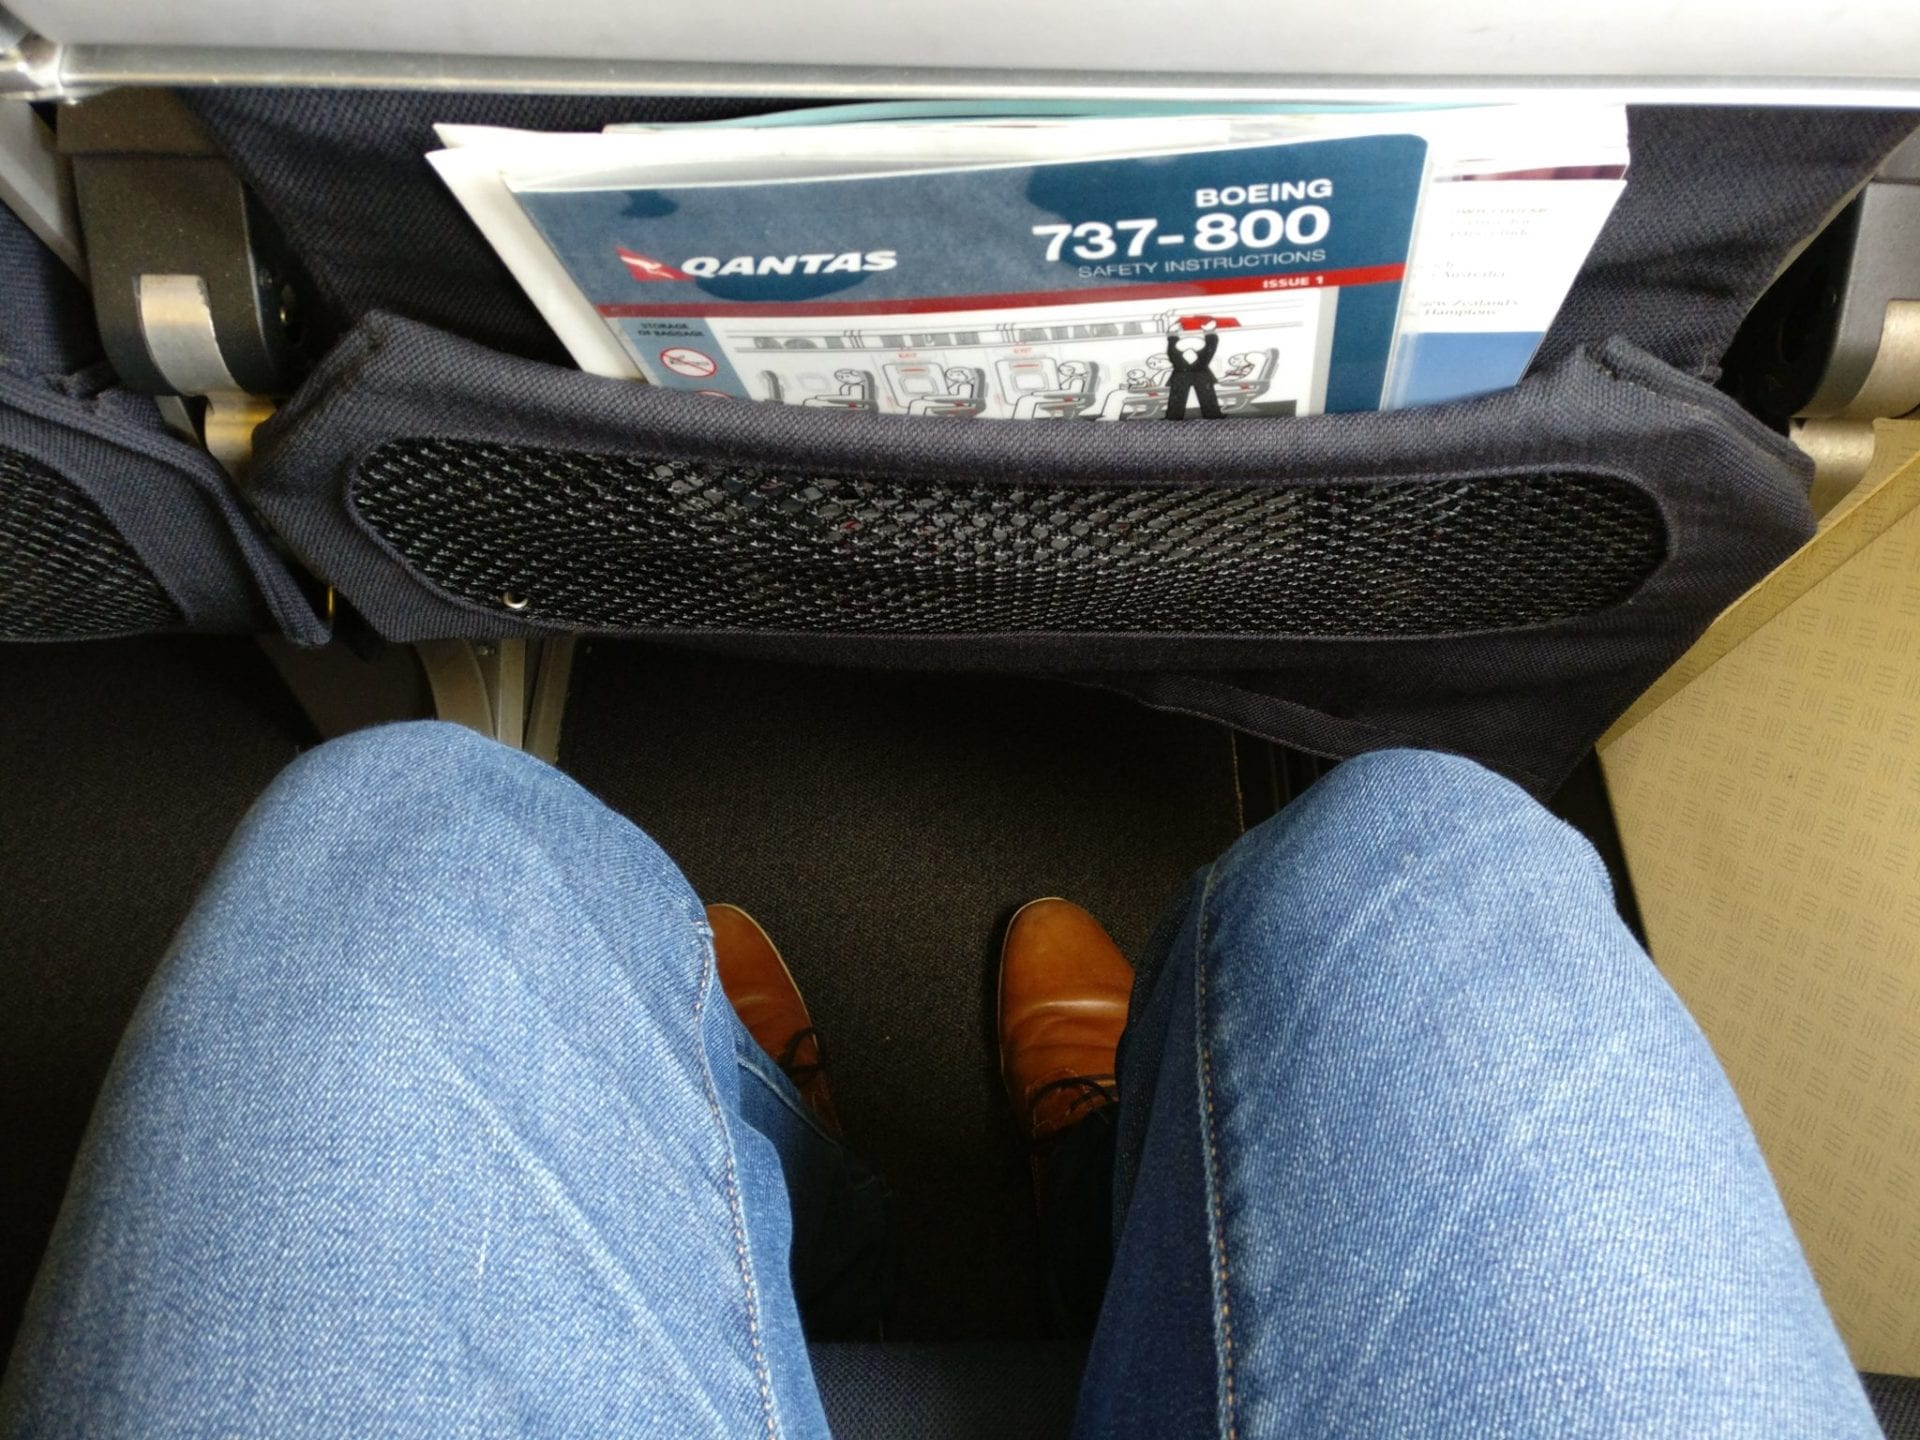 qantas-economy-class-boeing-737-seating-6